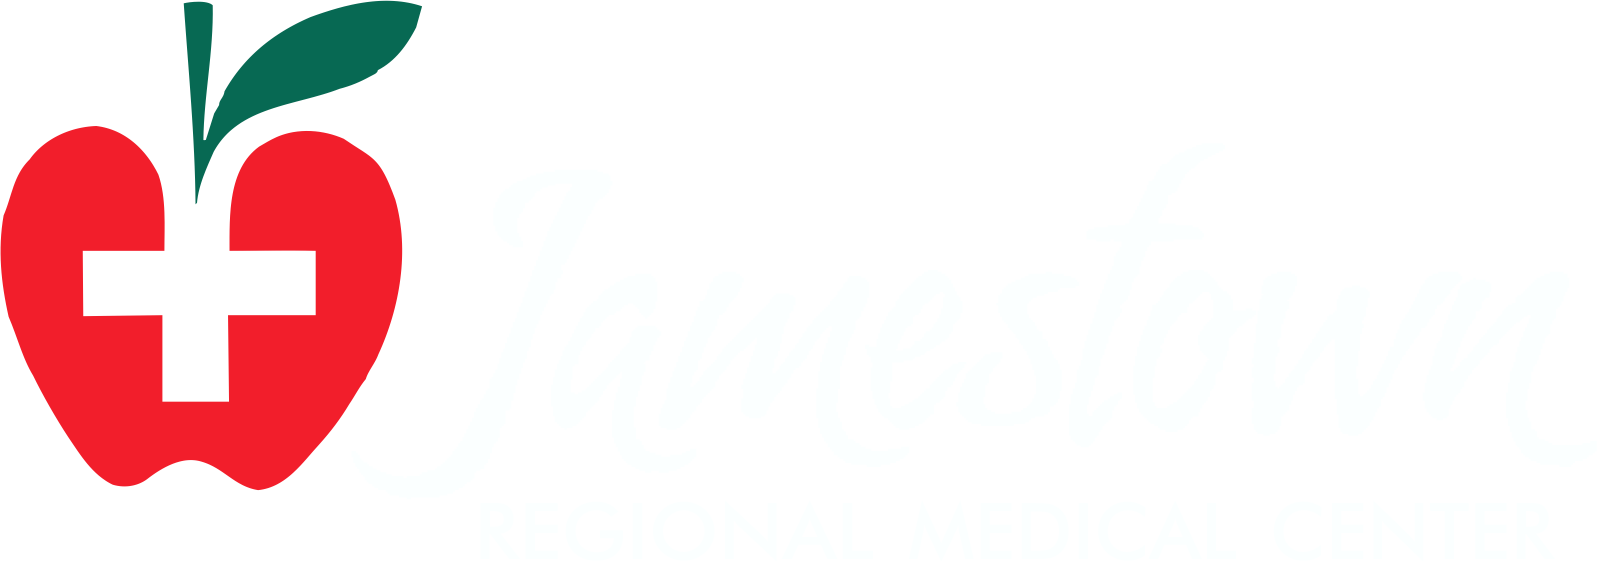 jamestown-hospital-logo-17-white.png